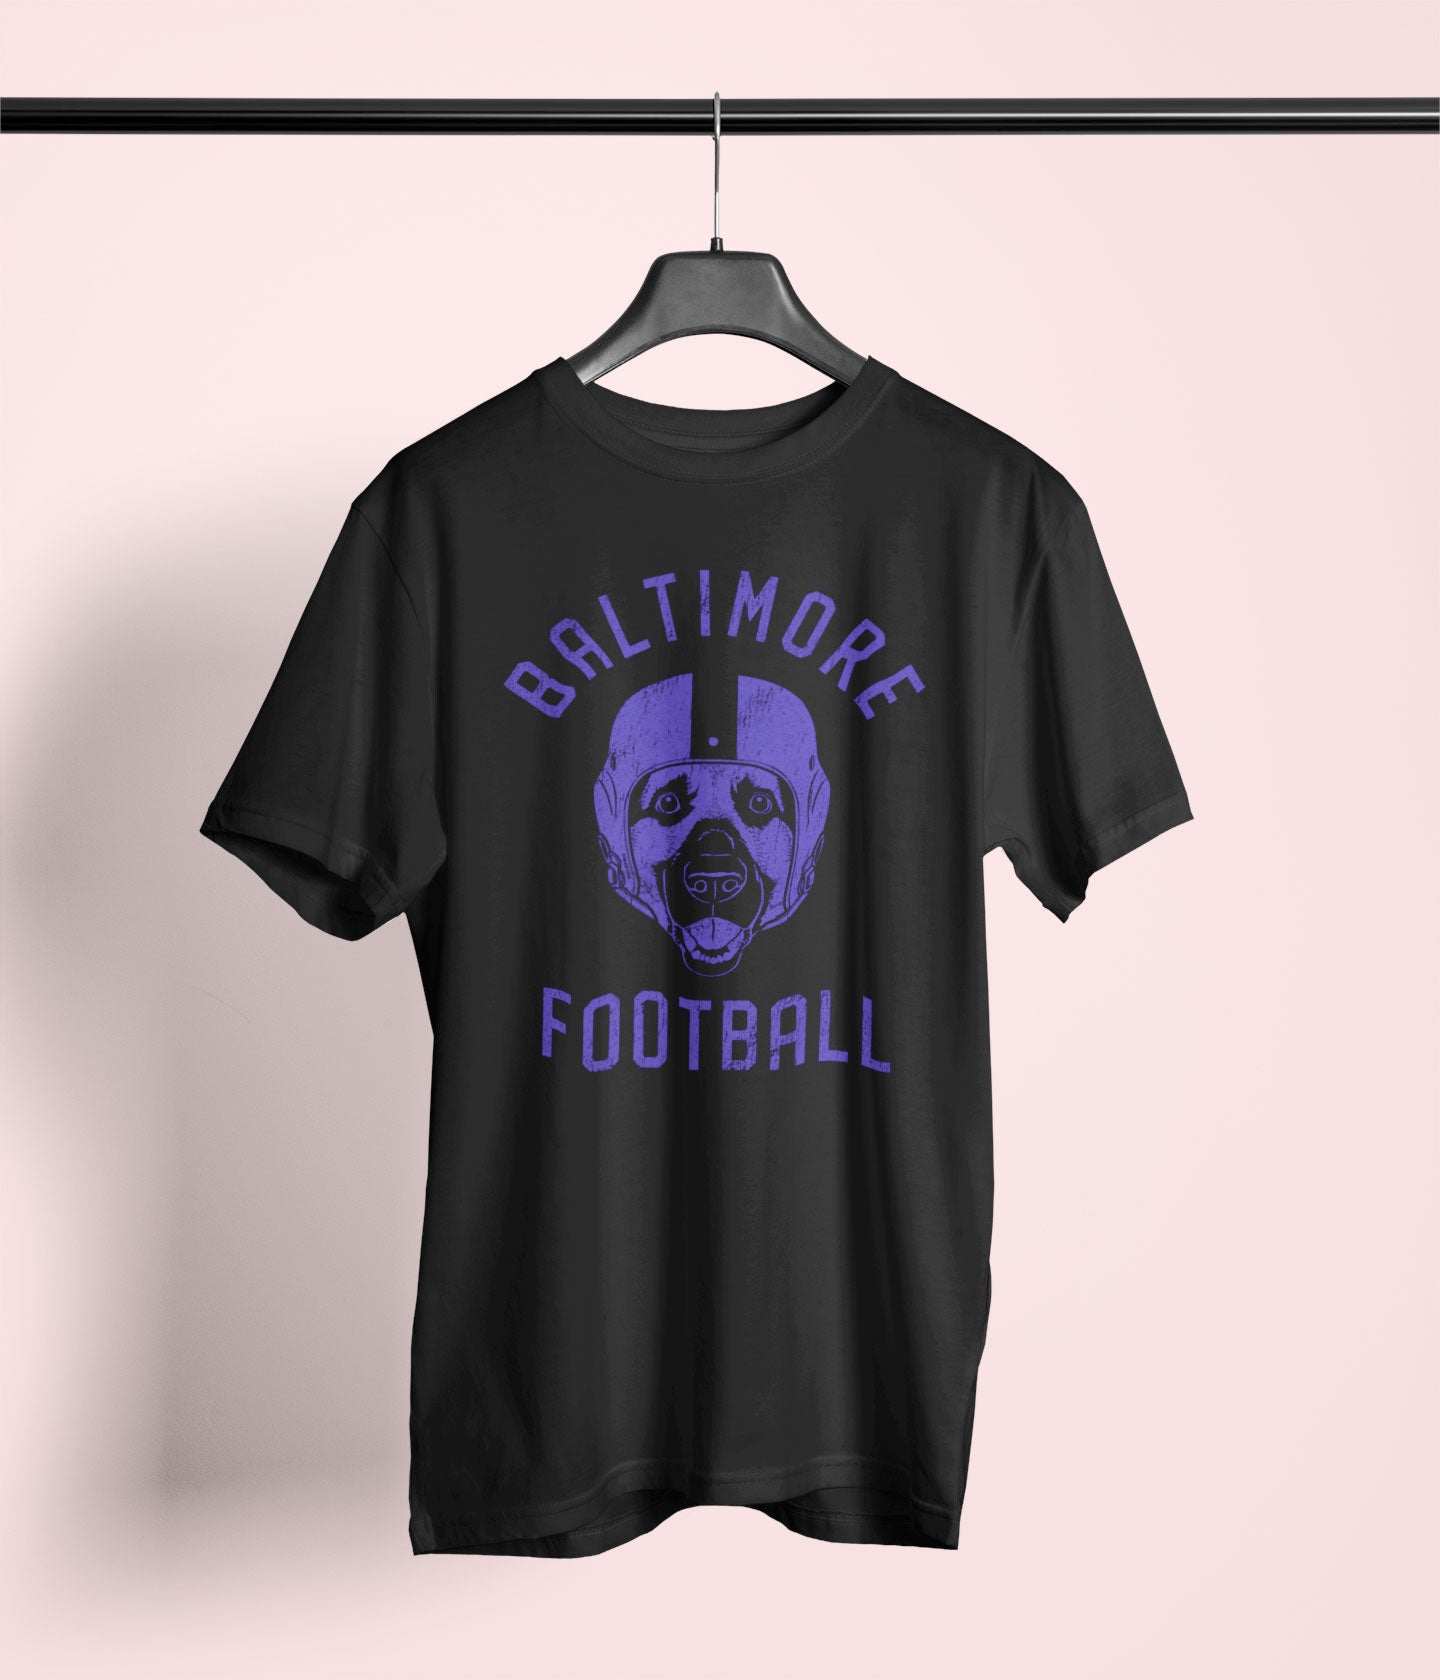 Baltimore Football German Shepherd T-Shirt